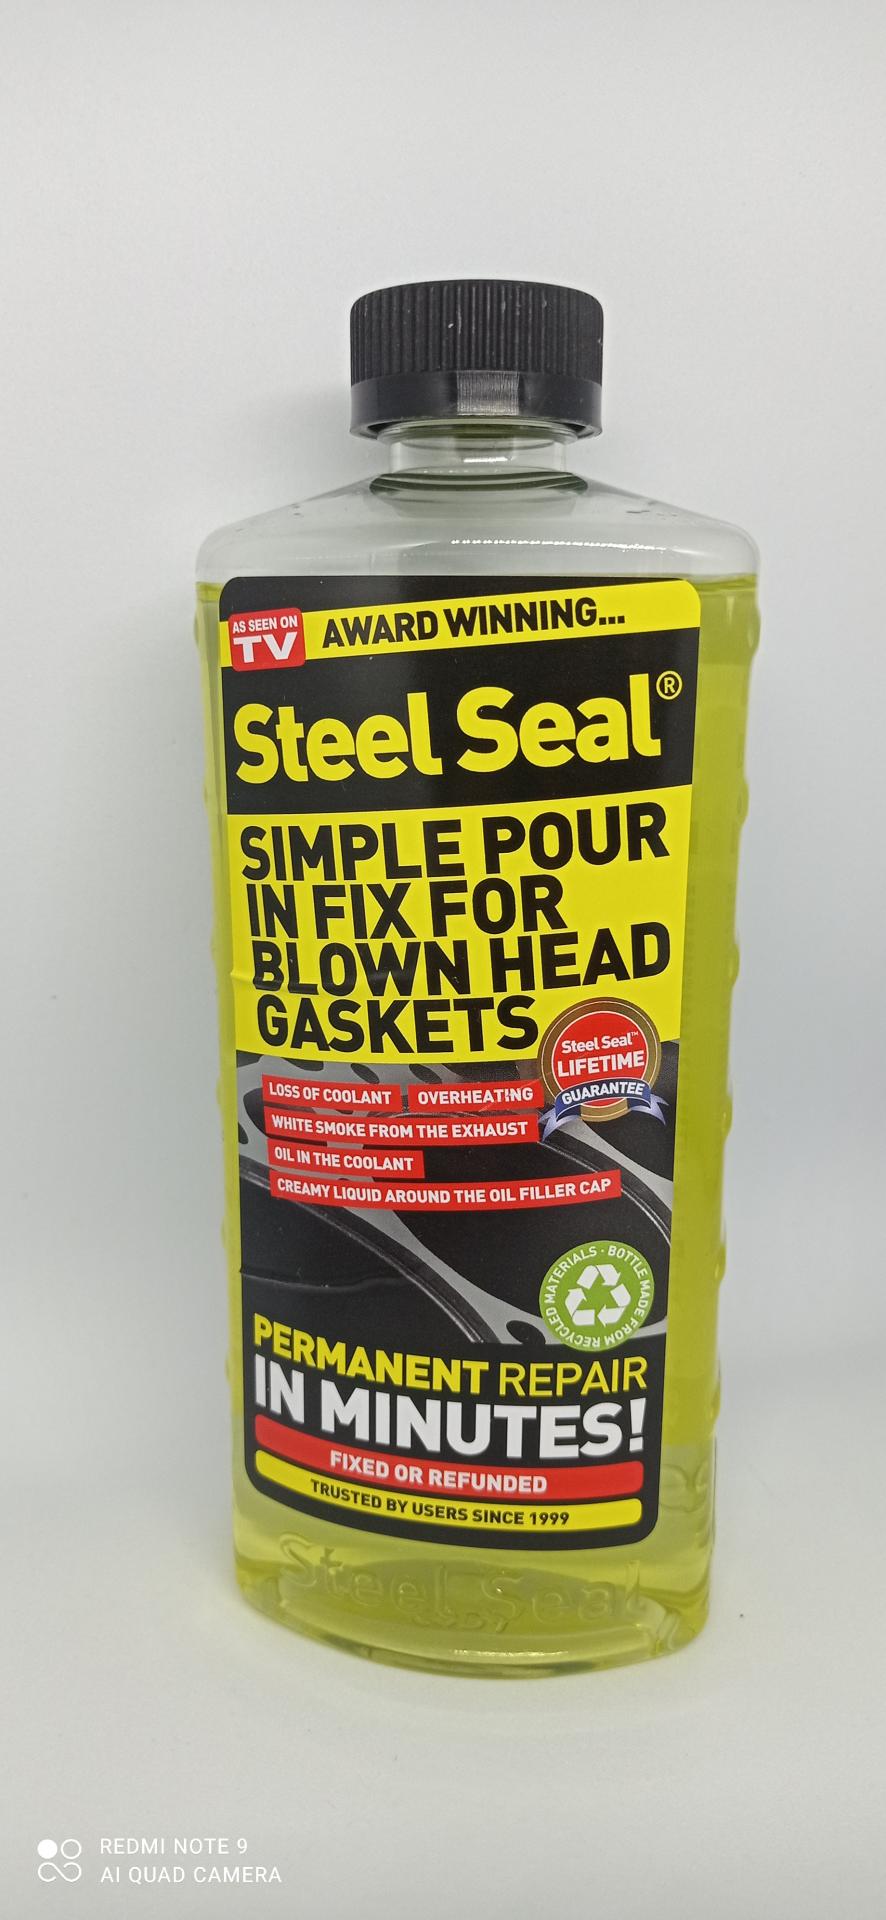 Steel Seal – STEEL SEAL France Officiel